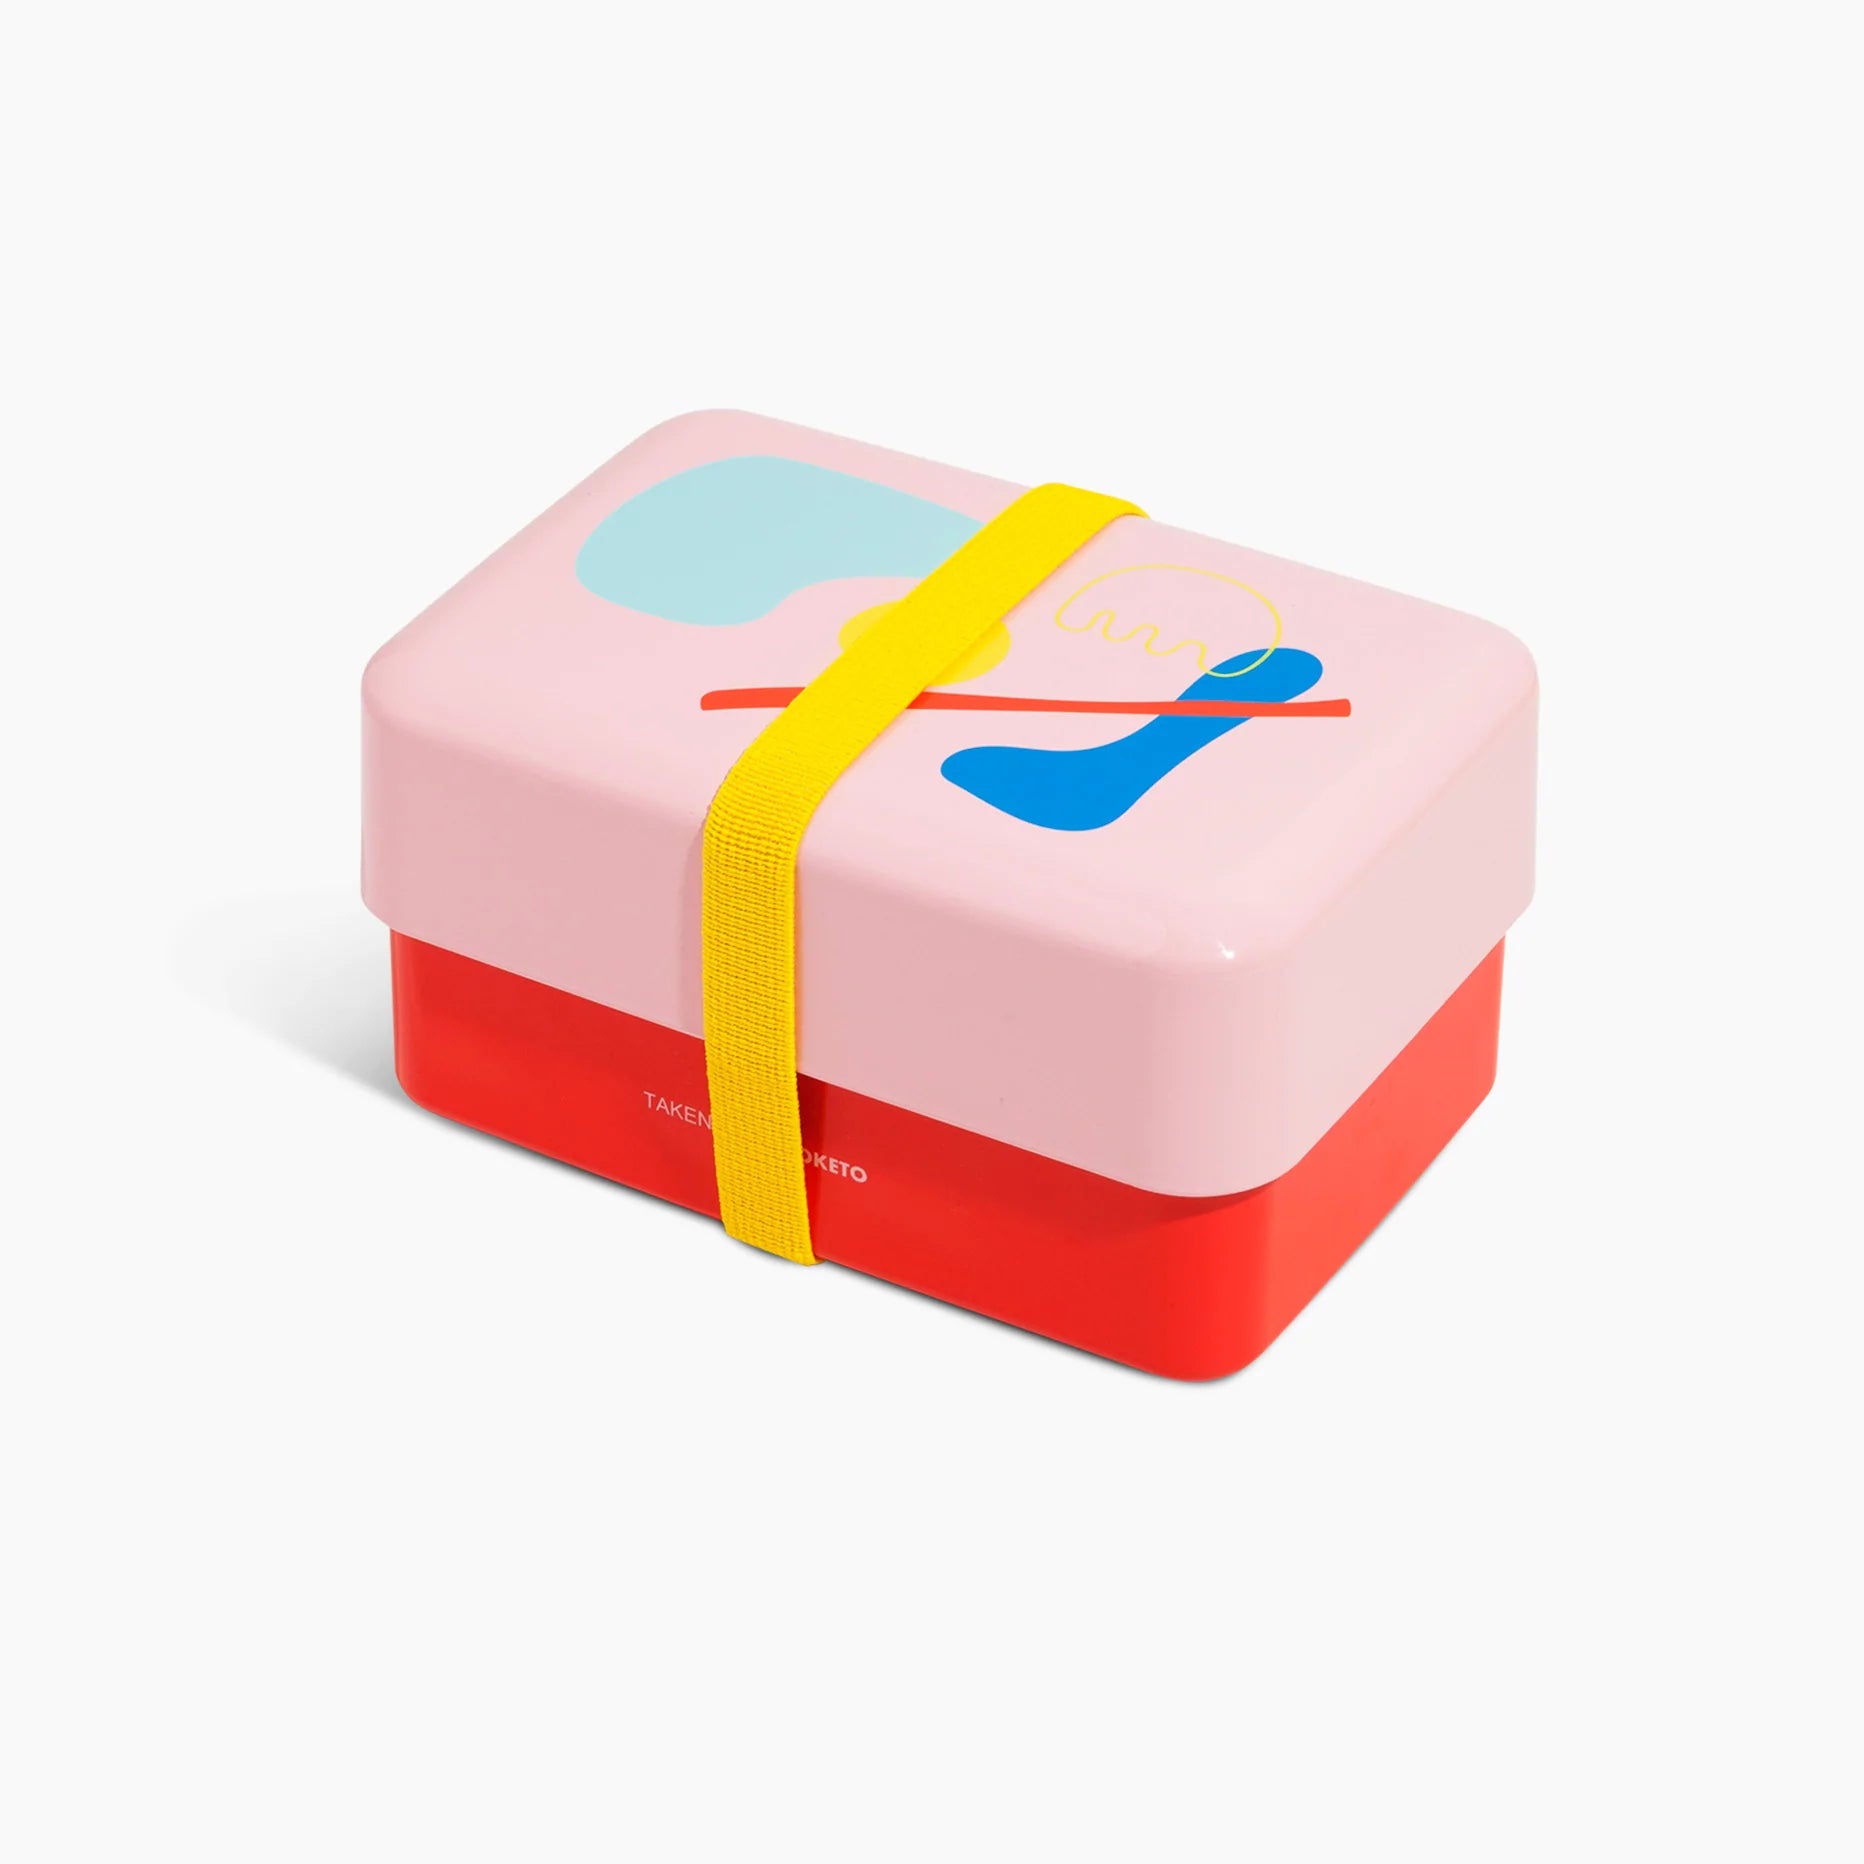 TAKENAKA BENTO FLAT BOX - Apricot Rose – SISU